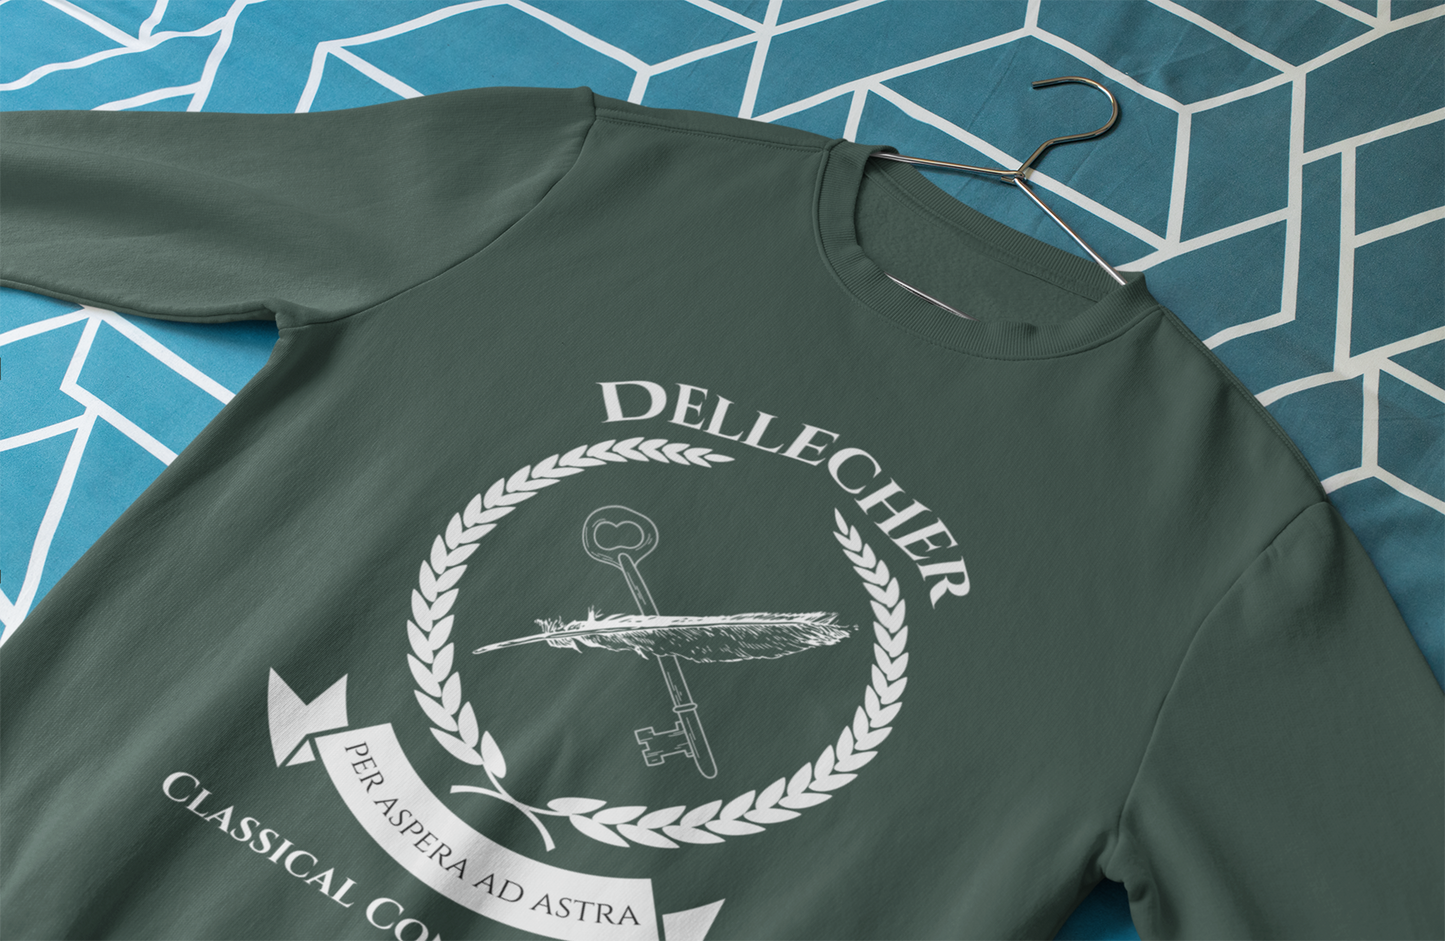 Dellecher Classical Conservatory Sweatshirt